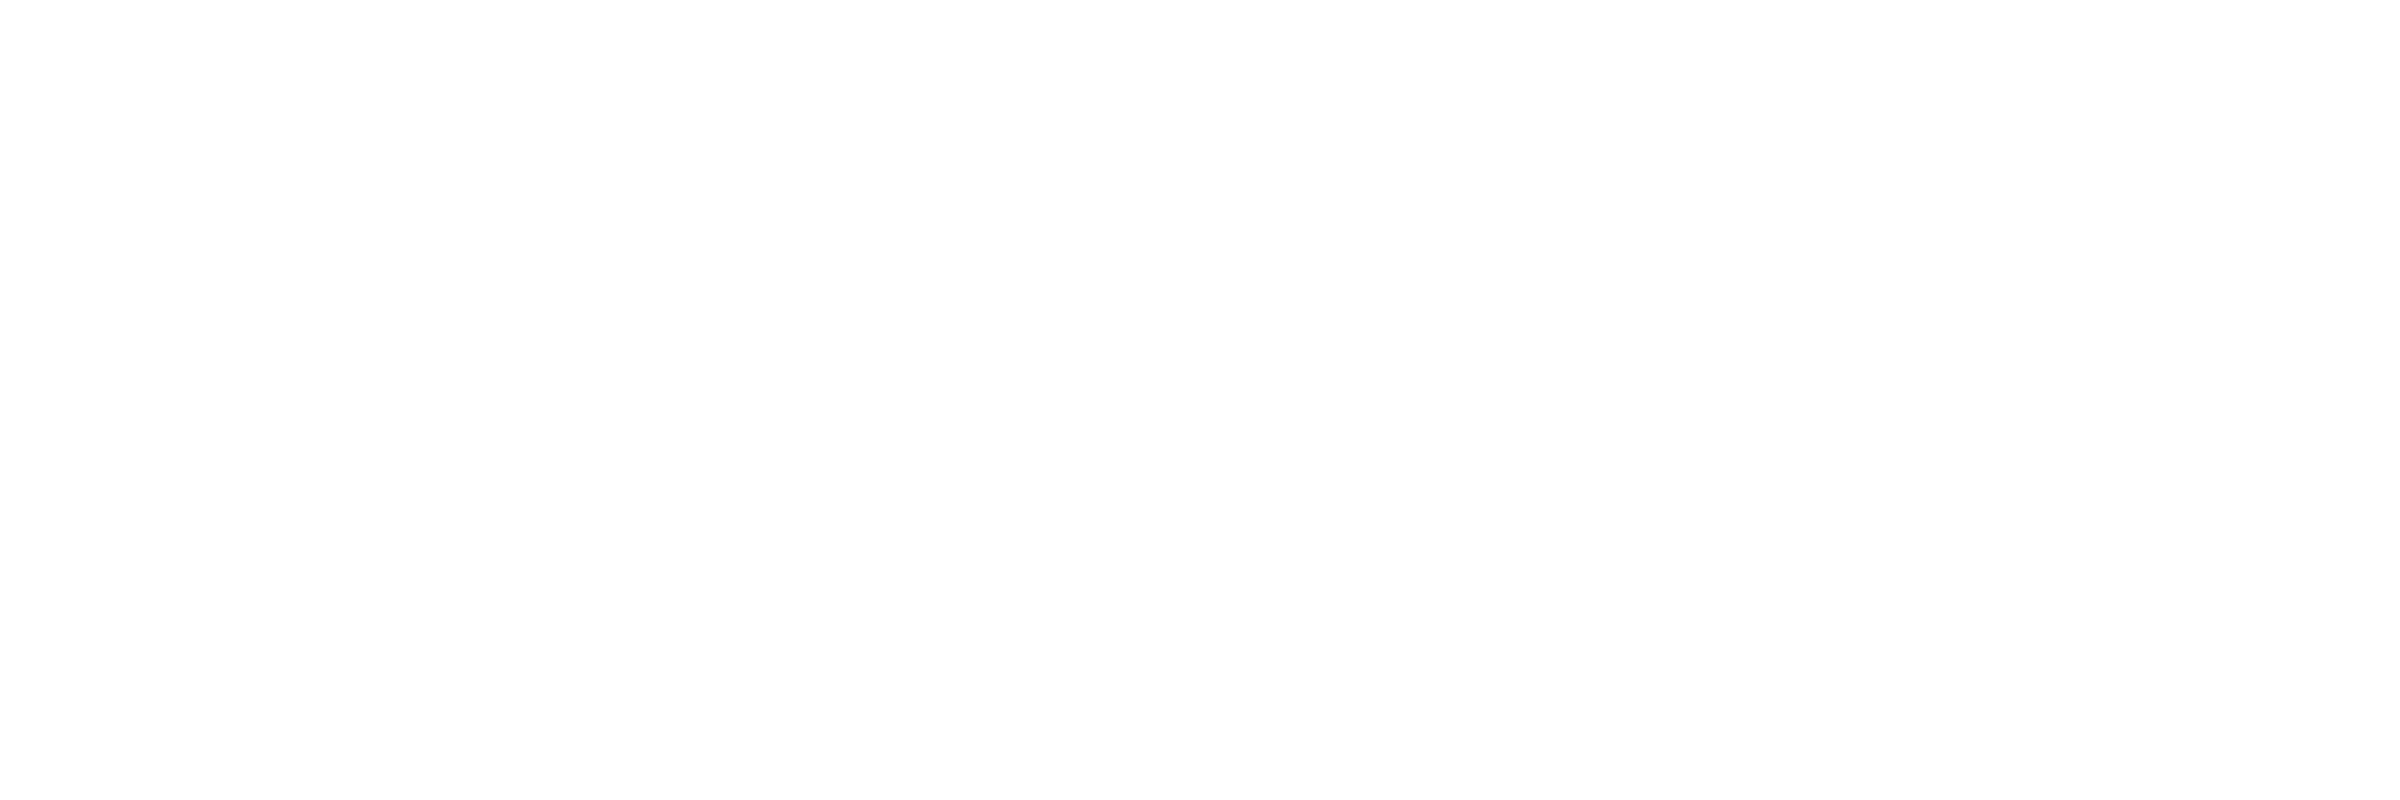 Asian Schoolgirl Pov Porn - bodyright - Own your body online | Bodily Integrity | UNFPA